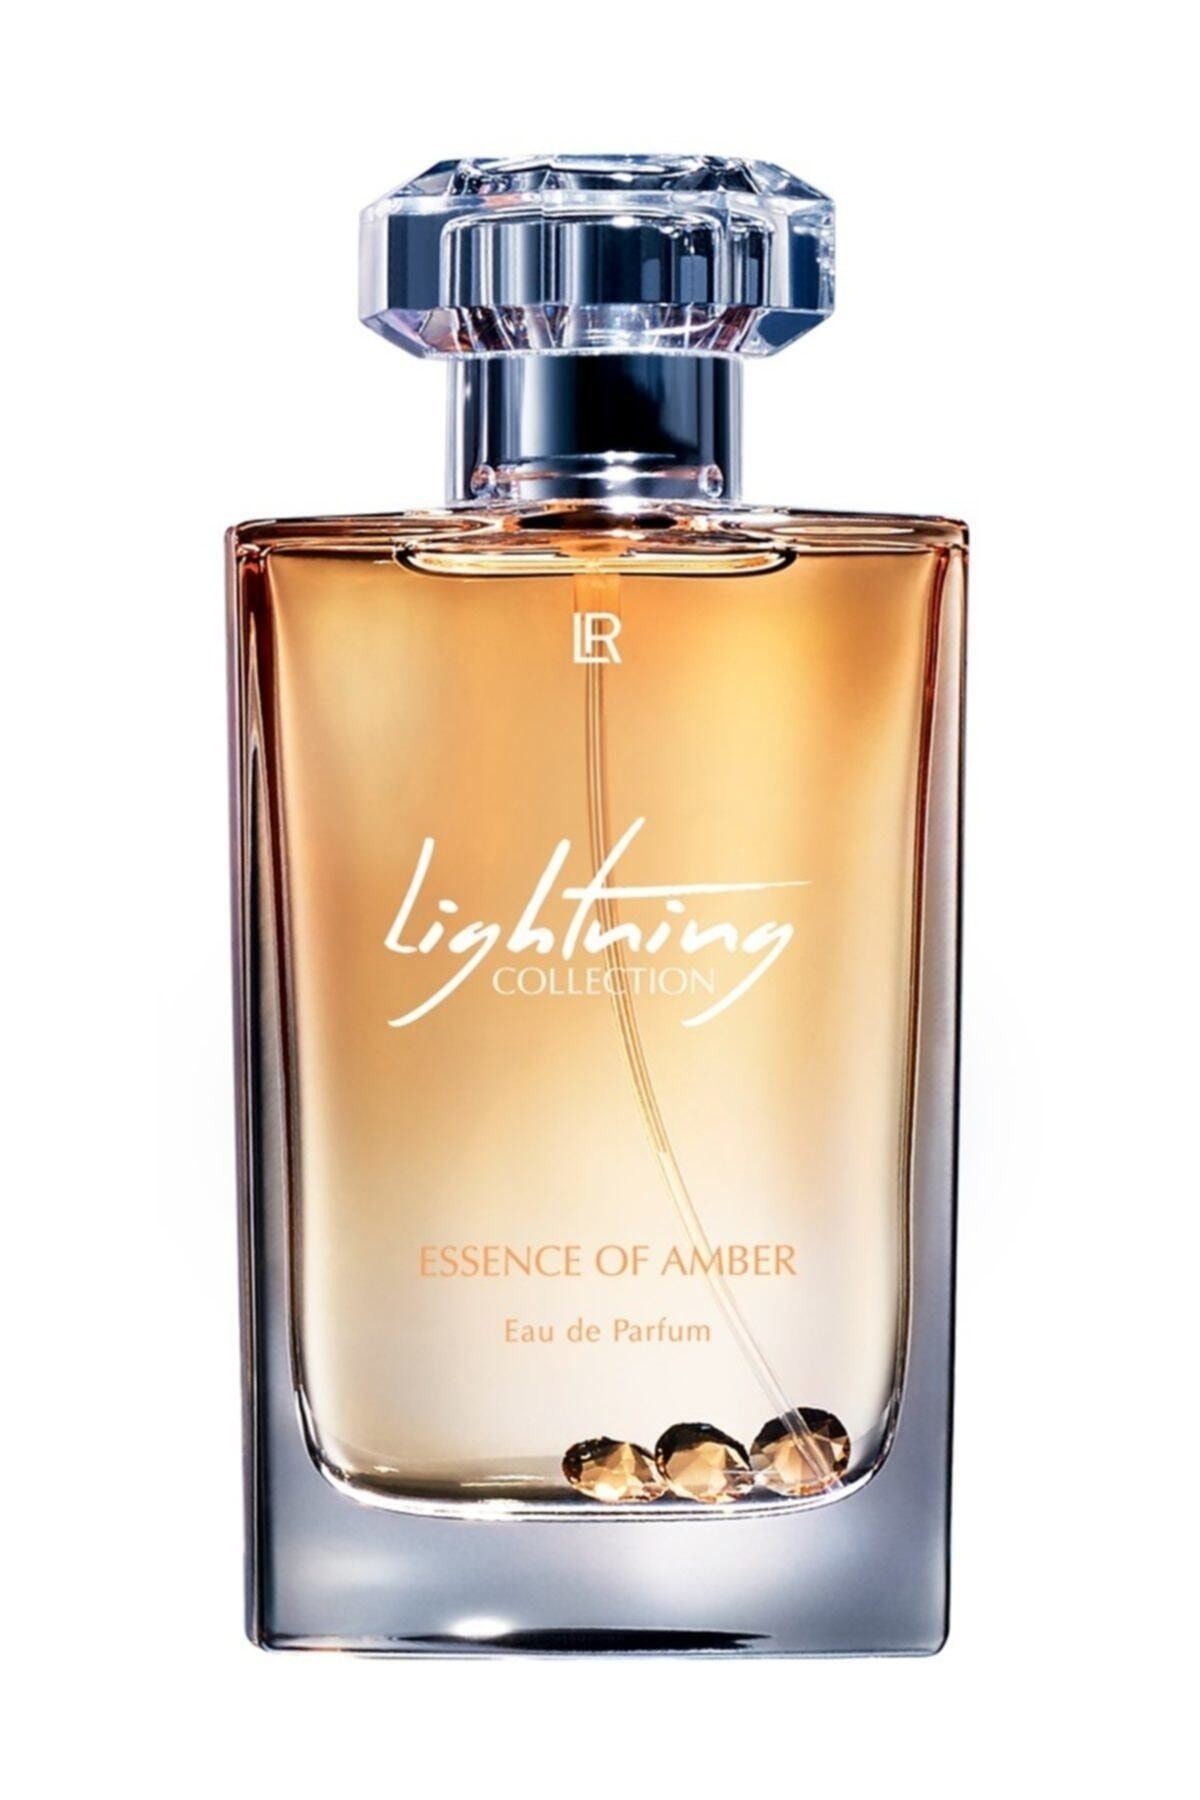 LR Lightning Collection Essence Of Amber Eau De Parfum